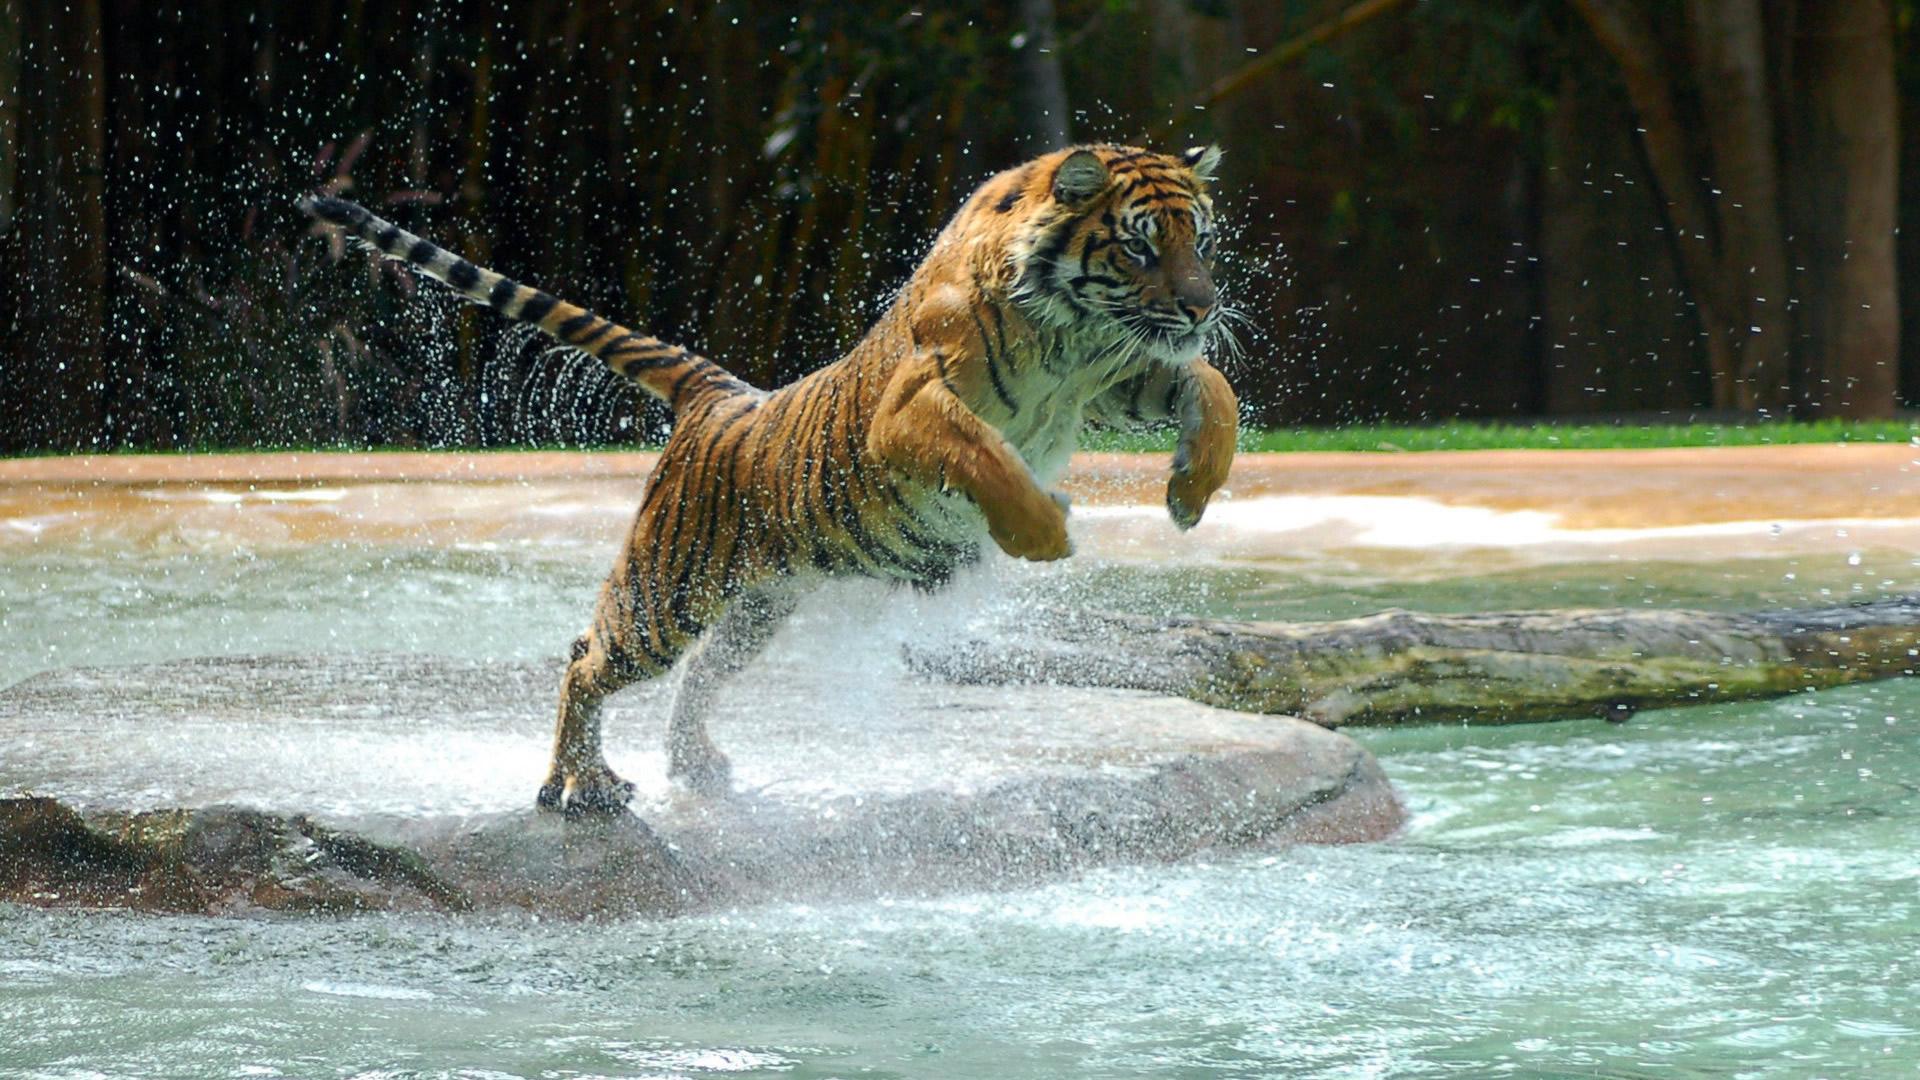 HD Wallpapers 1080p Tiger